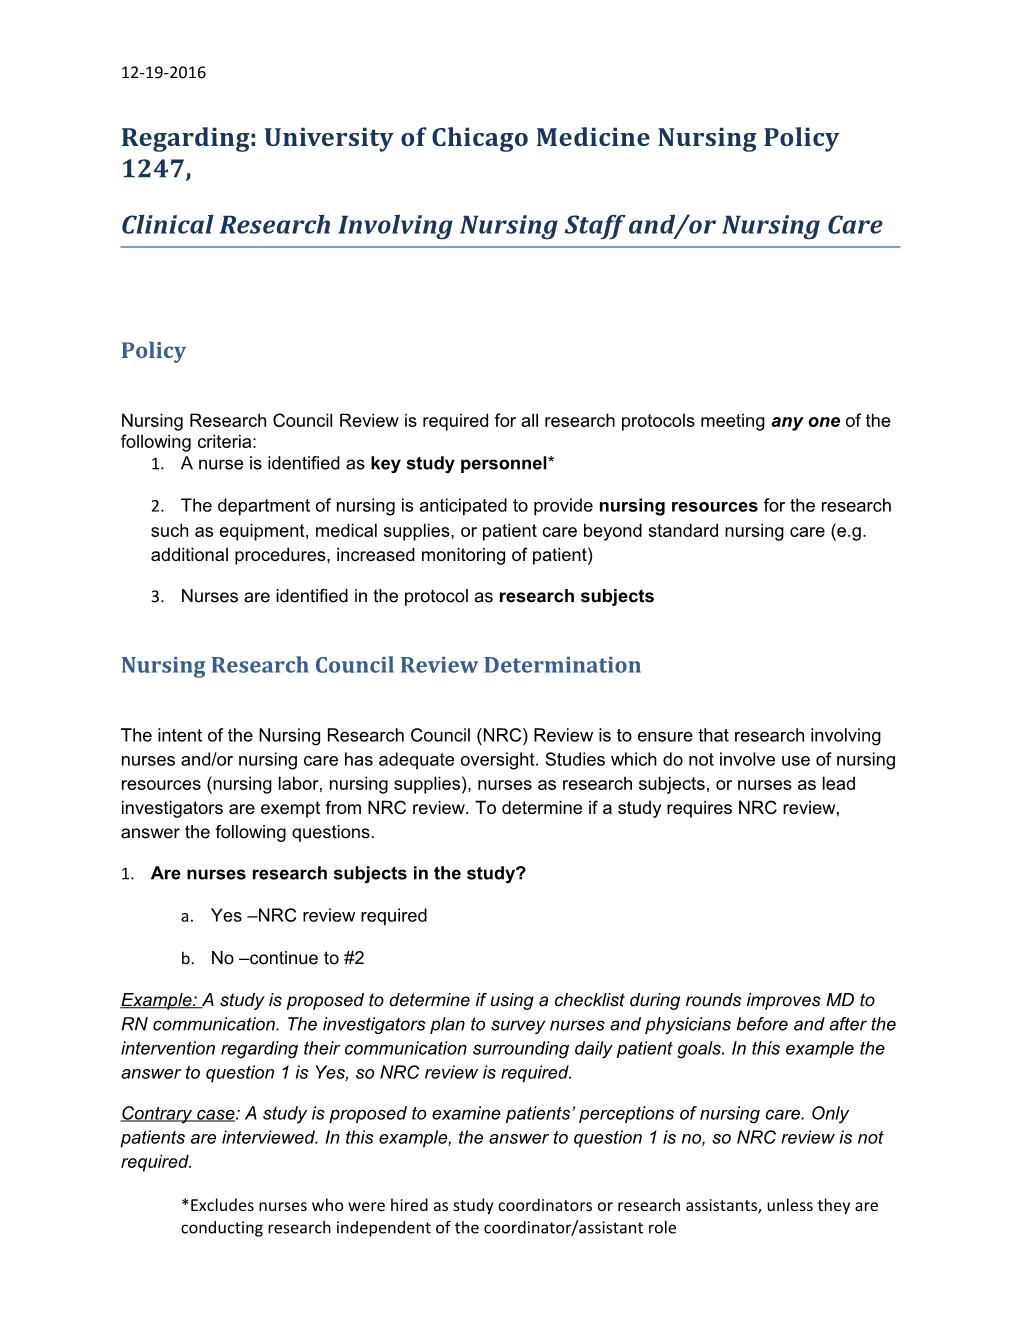 Regarding: University of Chicago Medicine Nursing Policy 1247